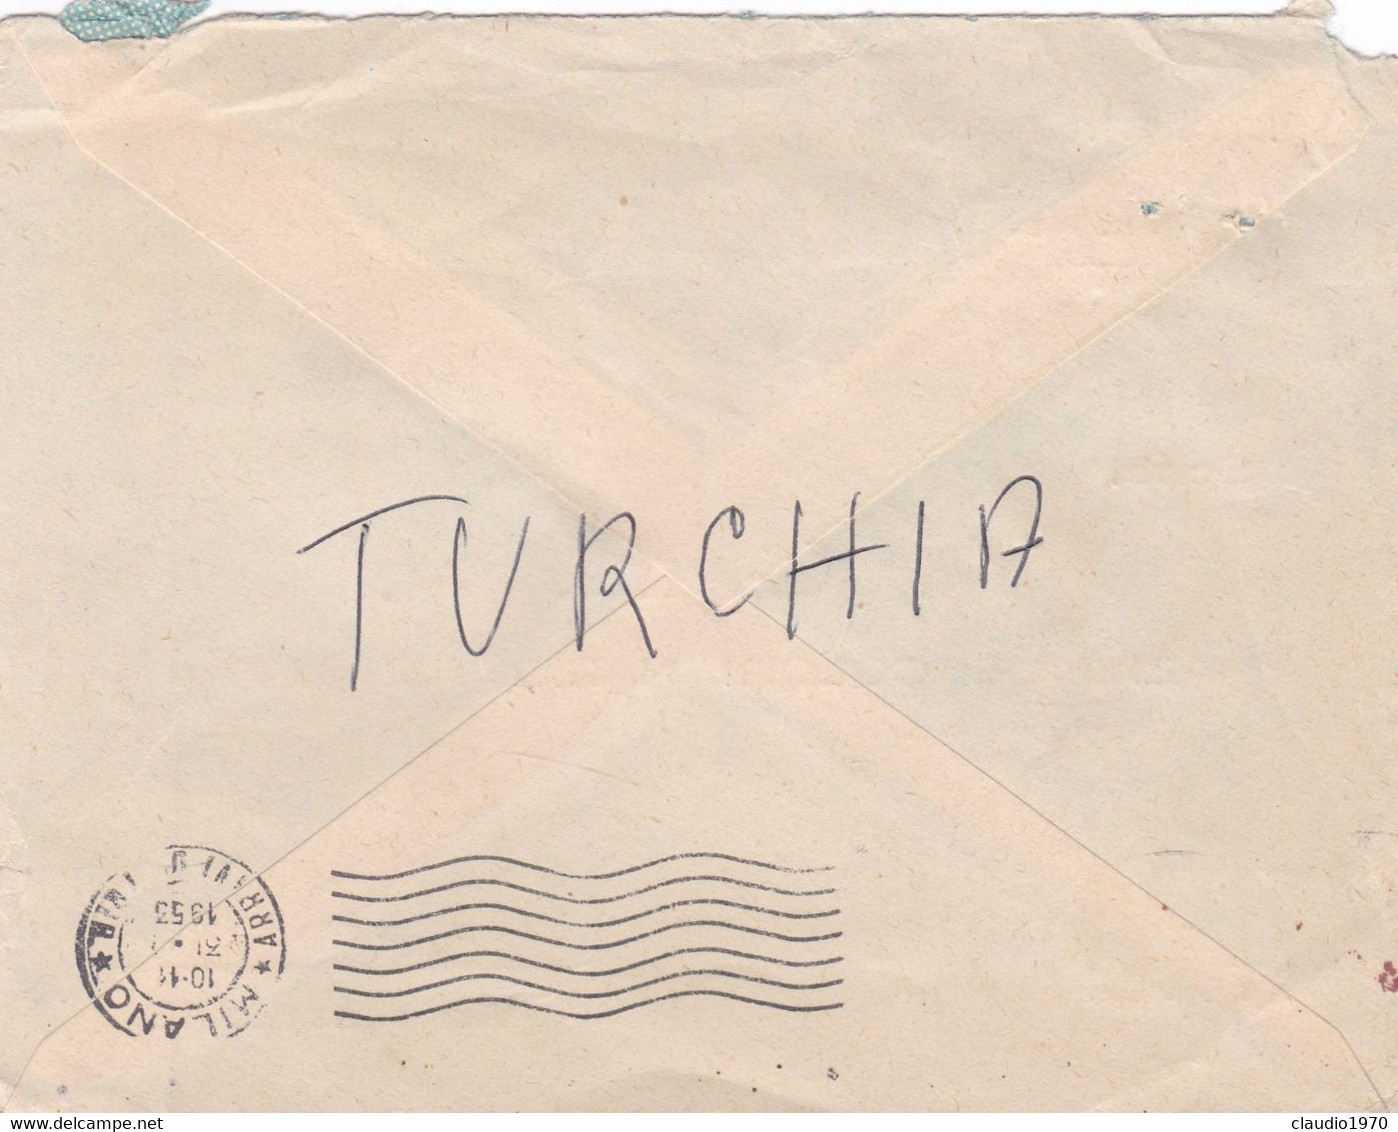 TURCHIA - TùKIYE -  ISTANBUL - STORIA POSTALE - BUSTA PAR AVION  I.T.I. T.I. - T.A.S  VIAGGIATA PER MILANO - ITALIA 1953 - Cartas & Documentos